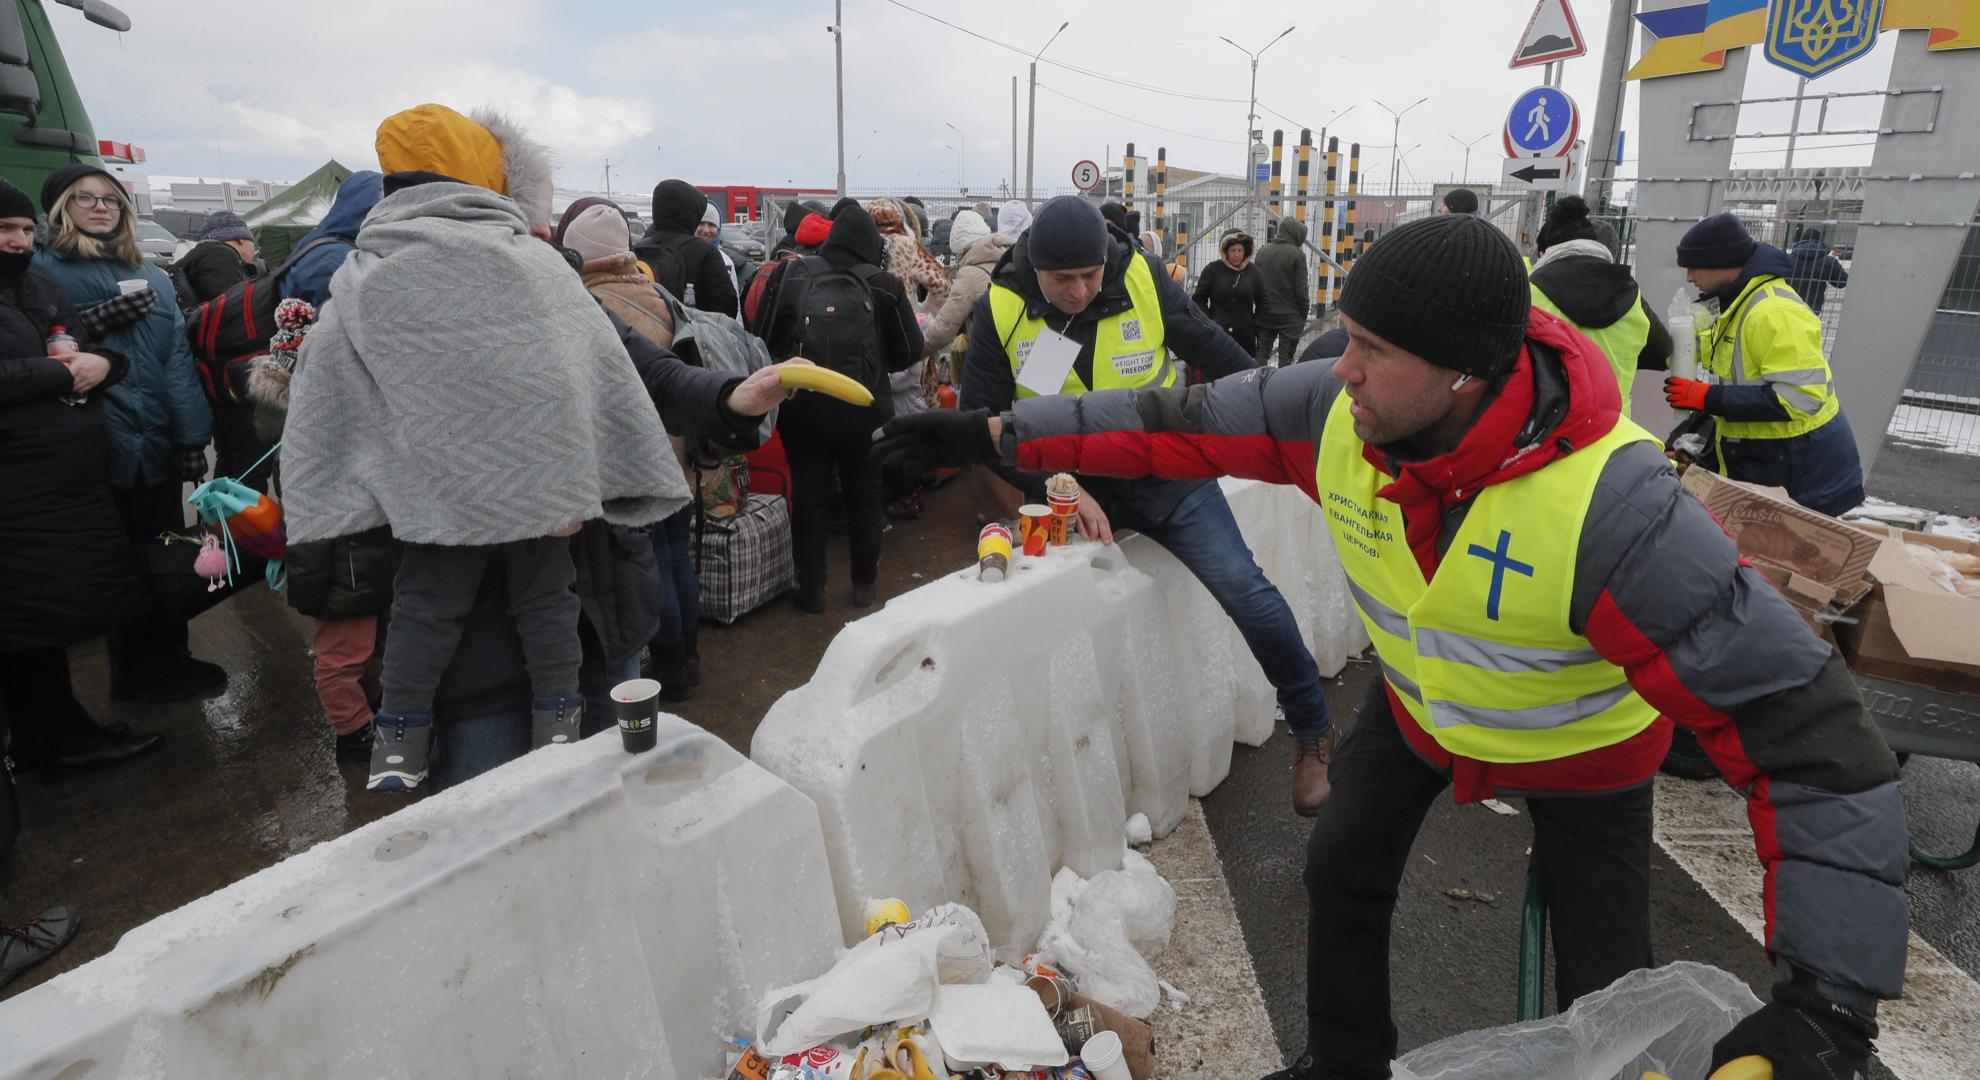 ayuda humanitaria llegan a chernivtsi ucrania reporta lalo salazar